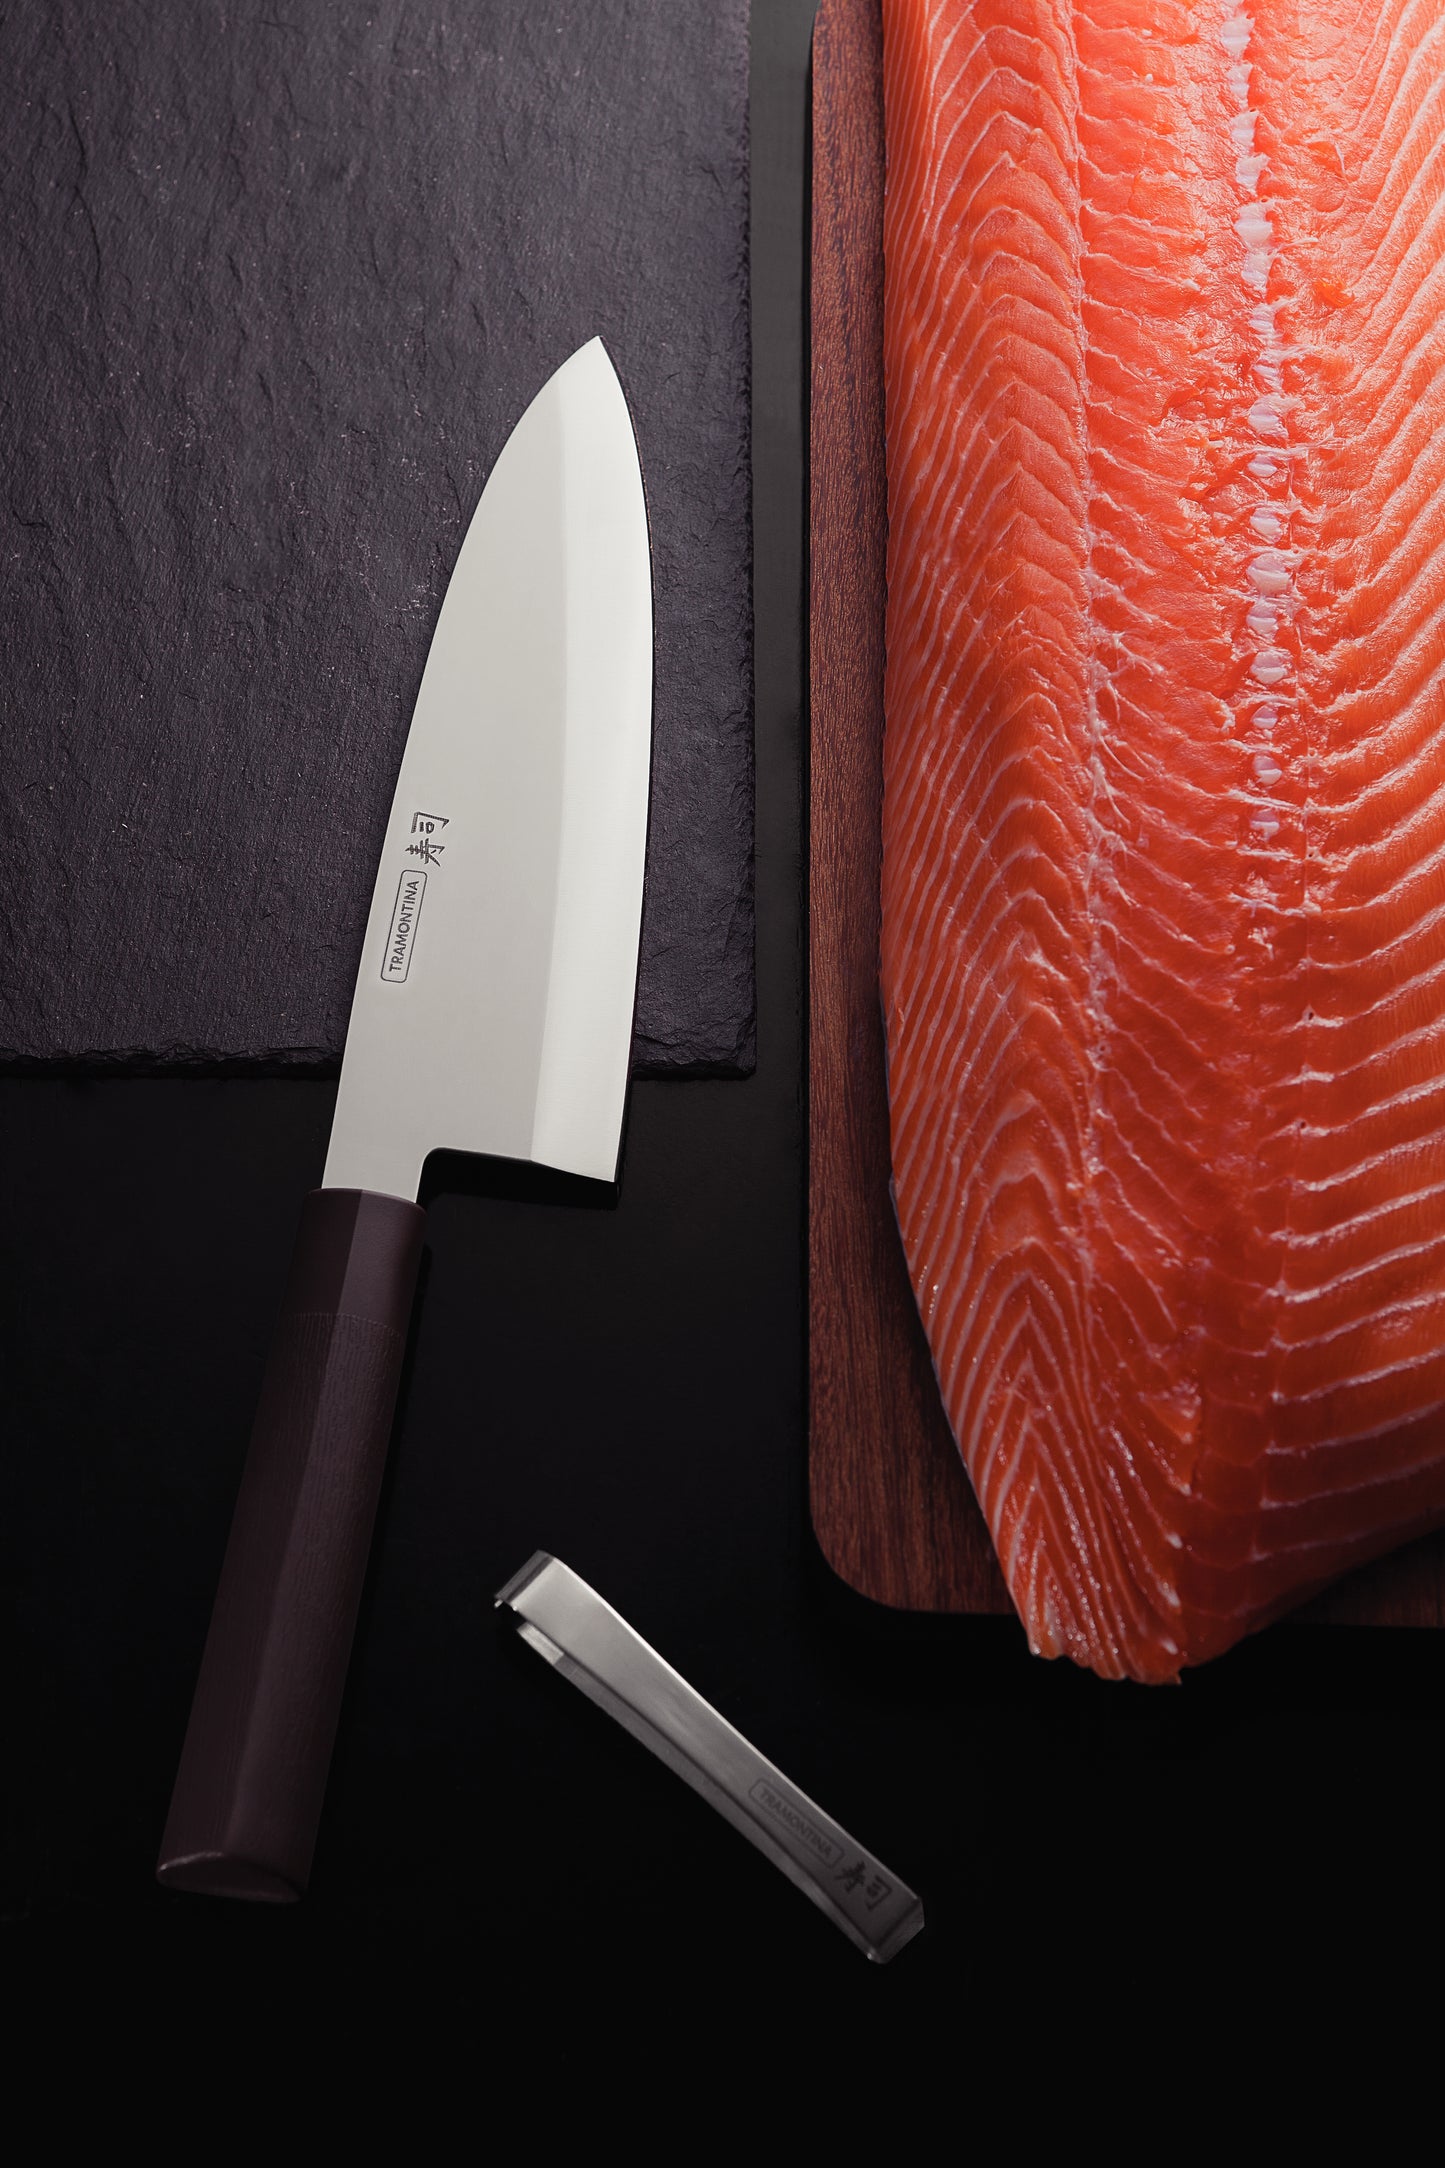 8" (20cm) Sushi Knife Deba - Silver